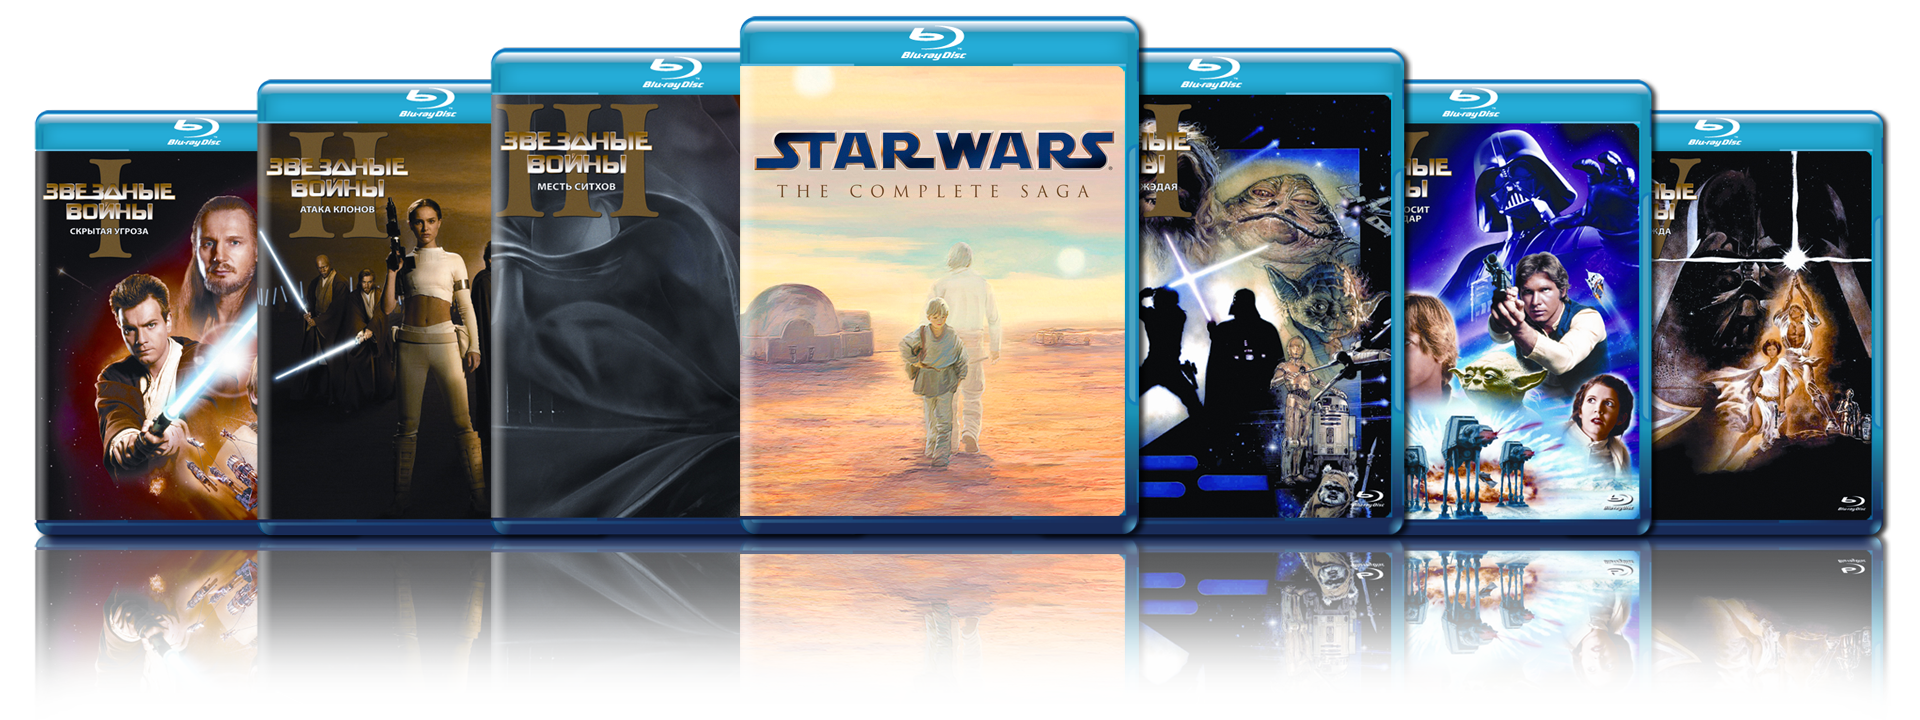 Star wars - episode iv: a new hope (comparison: blu-ray edition (fox) - 4k-remastered blu-ray (disney)) - movie-censorship.com